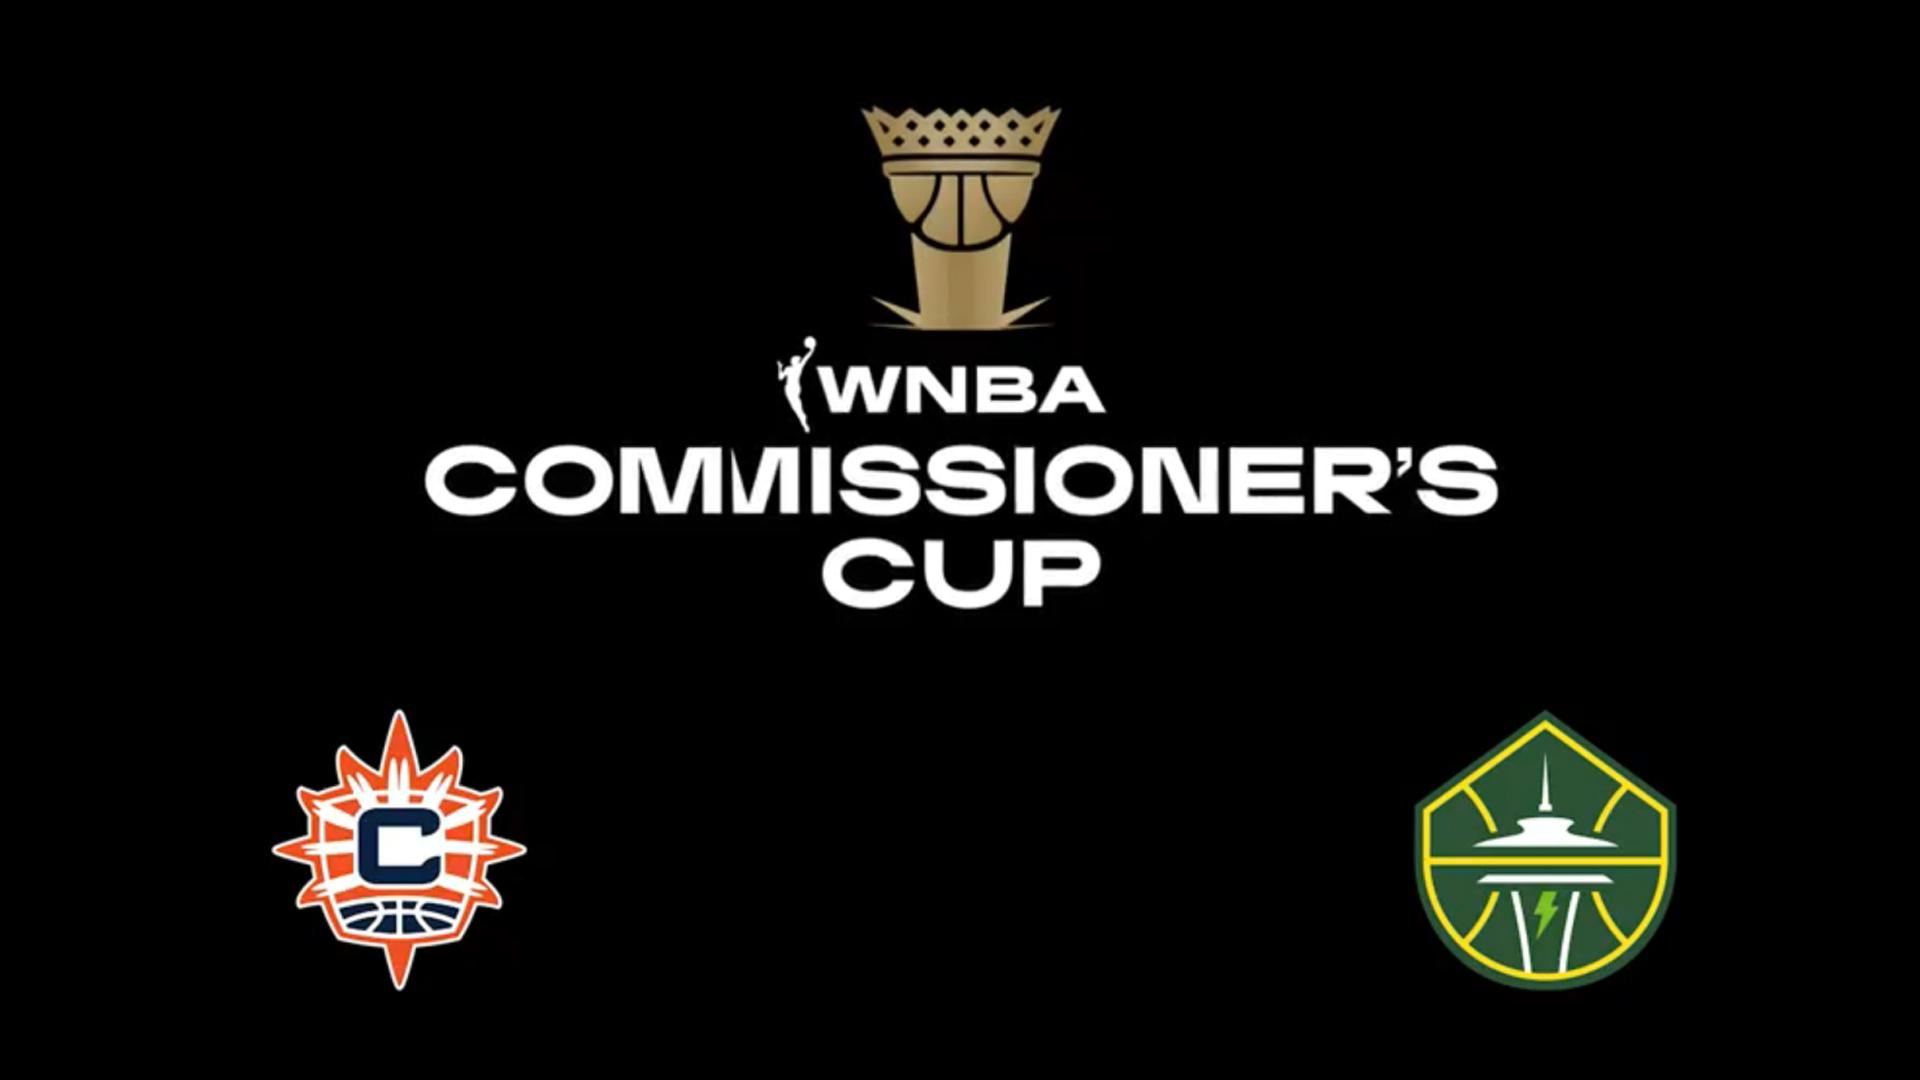 Commissioner's Cup WNBA 12 août 2021